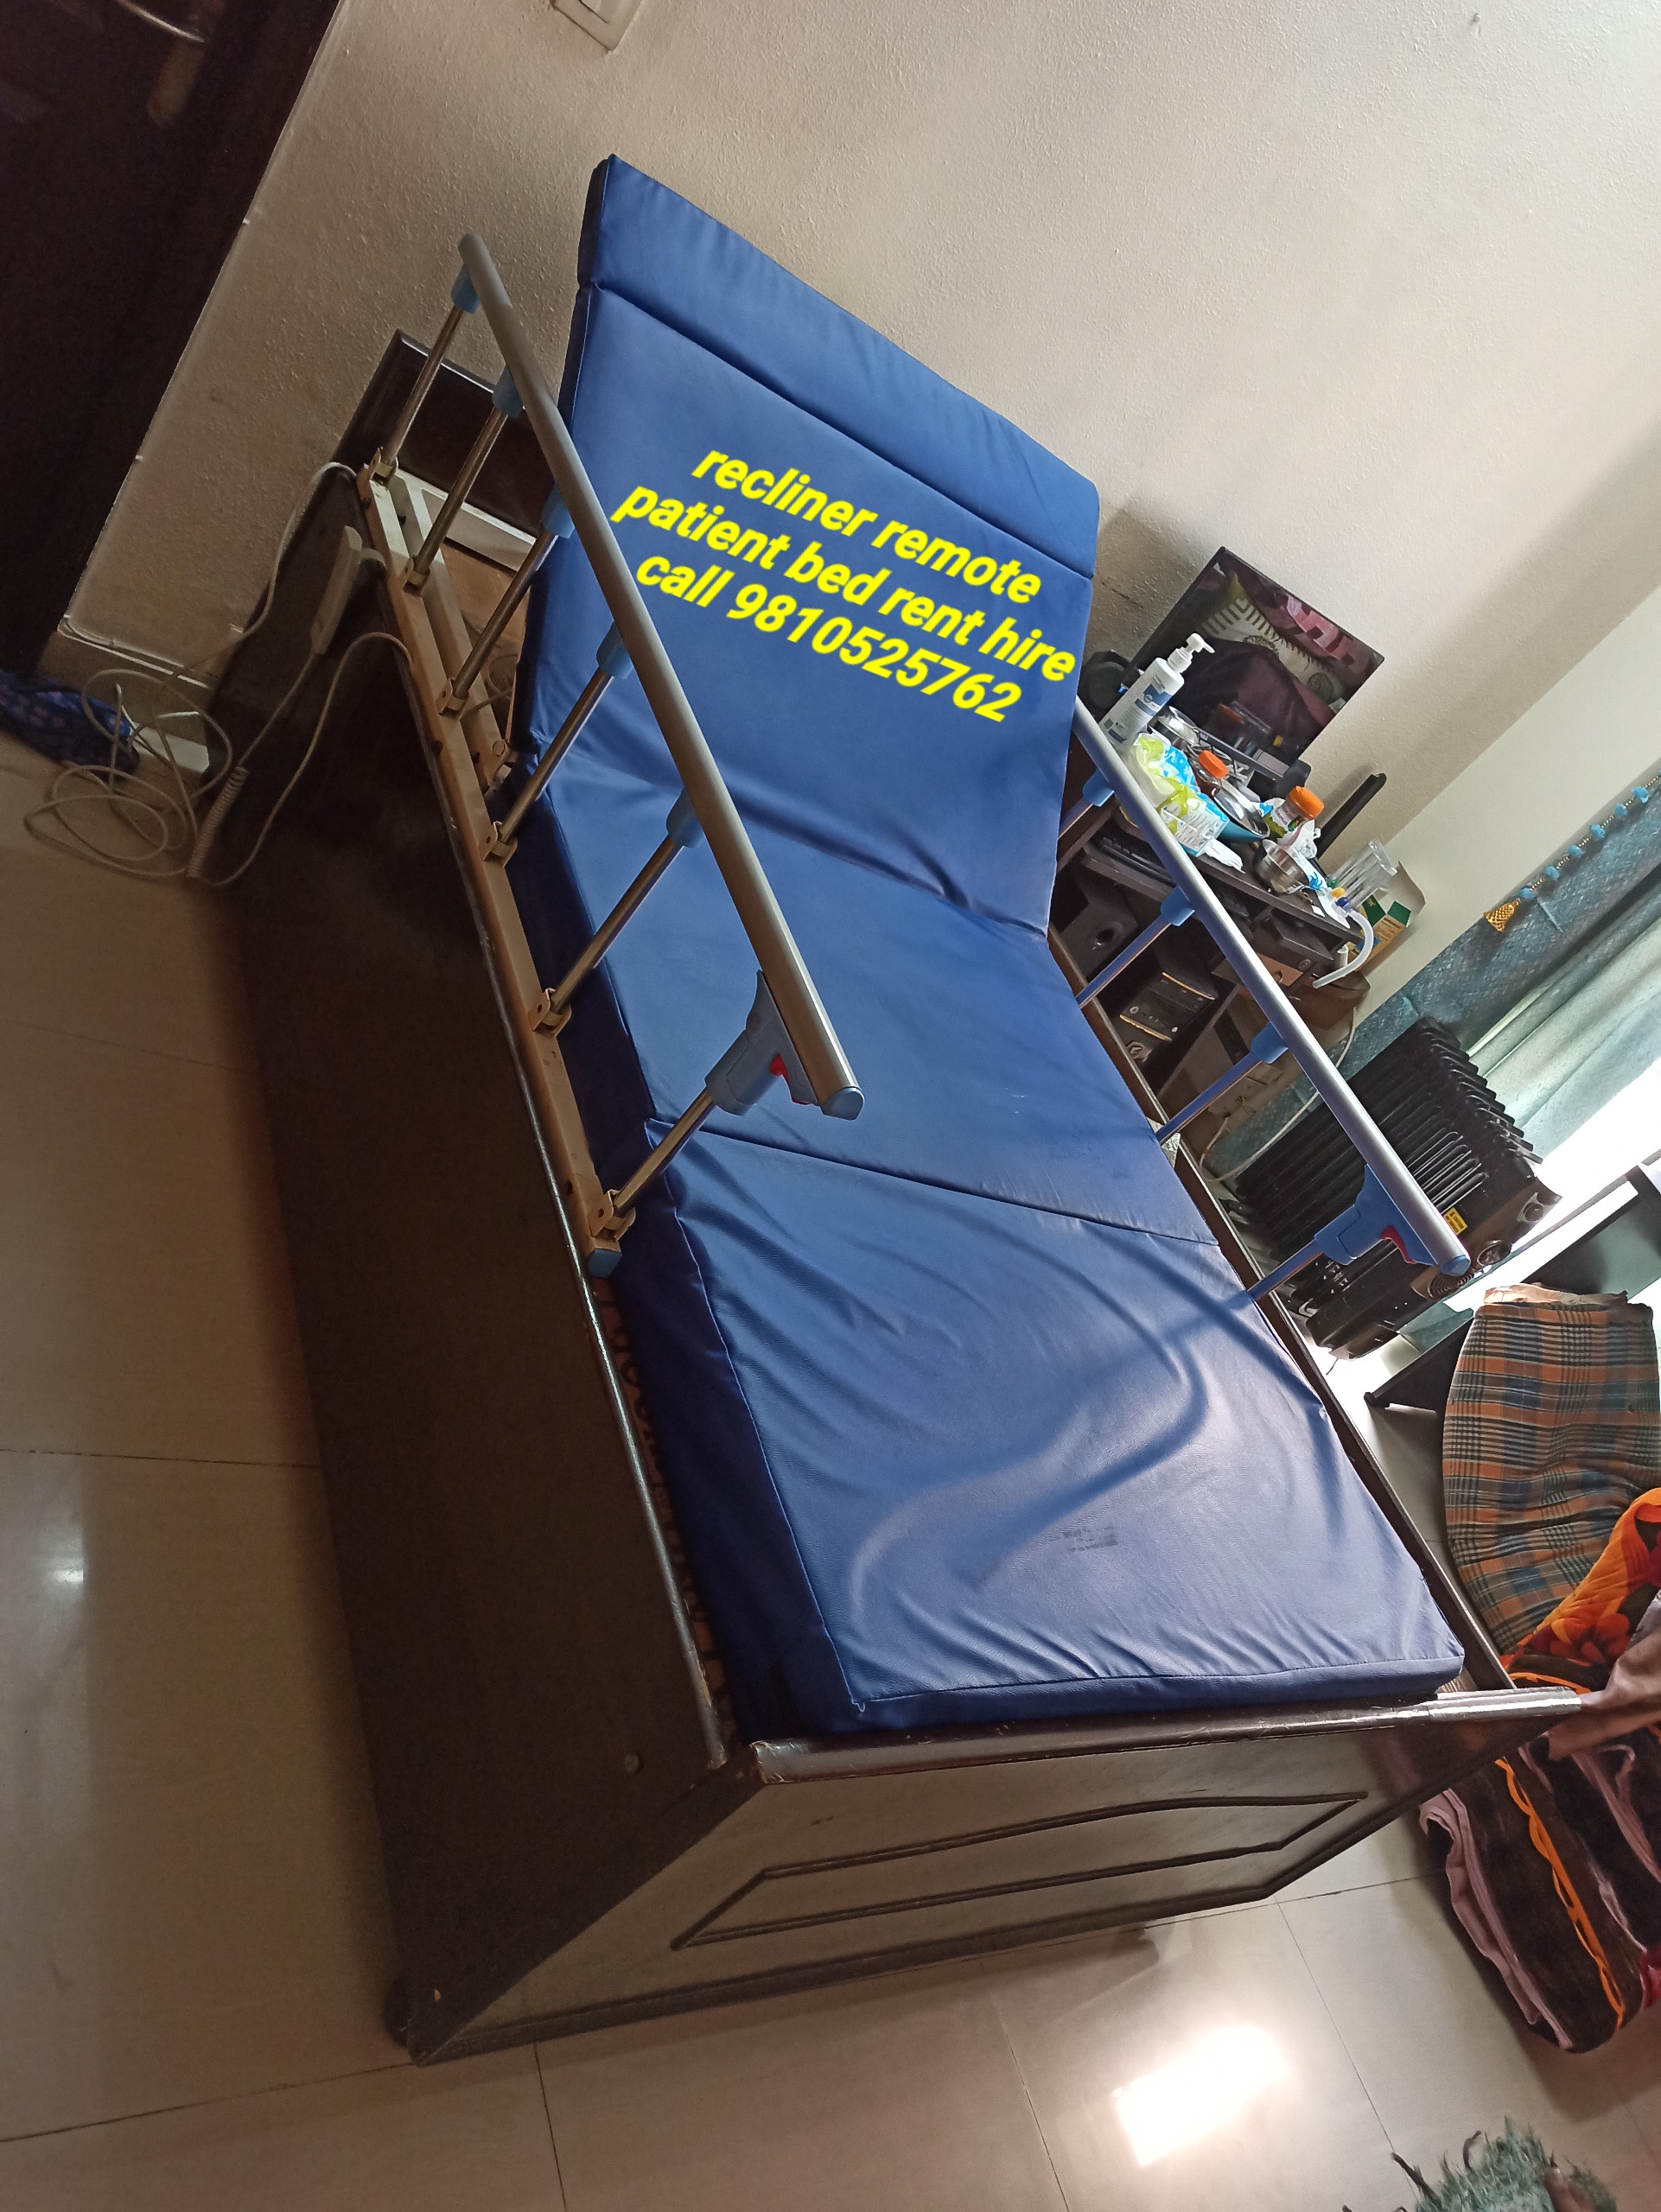 RENT MEDICAL HOSPITAL BED IN EAST DELHI 24*7 CALL 9810525762